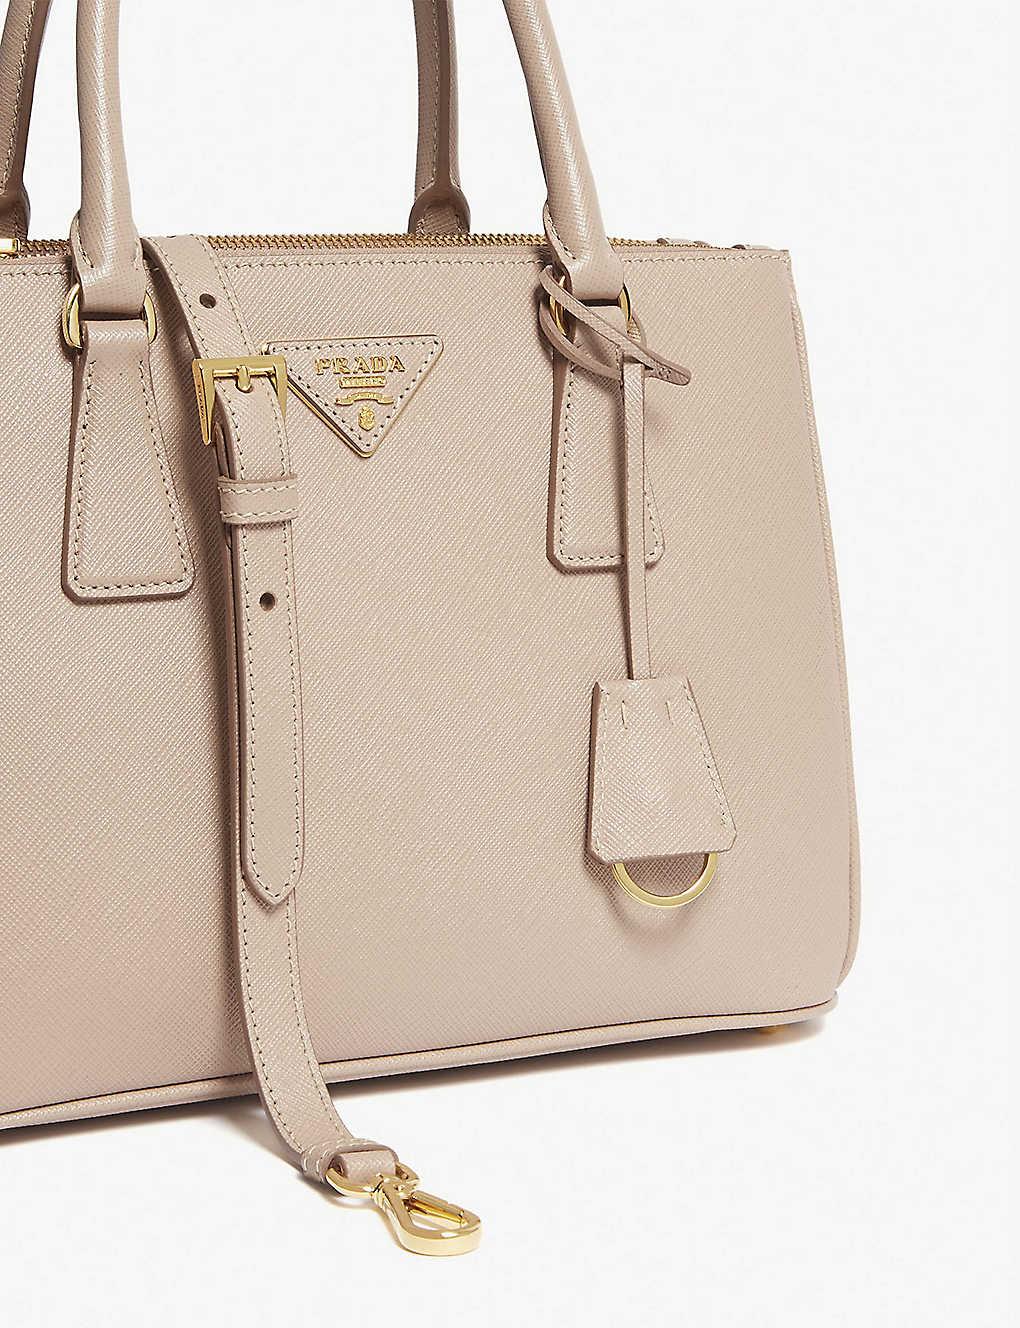 Prada Galleria Small Leather Tote Bag in Natural